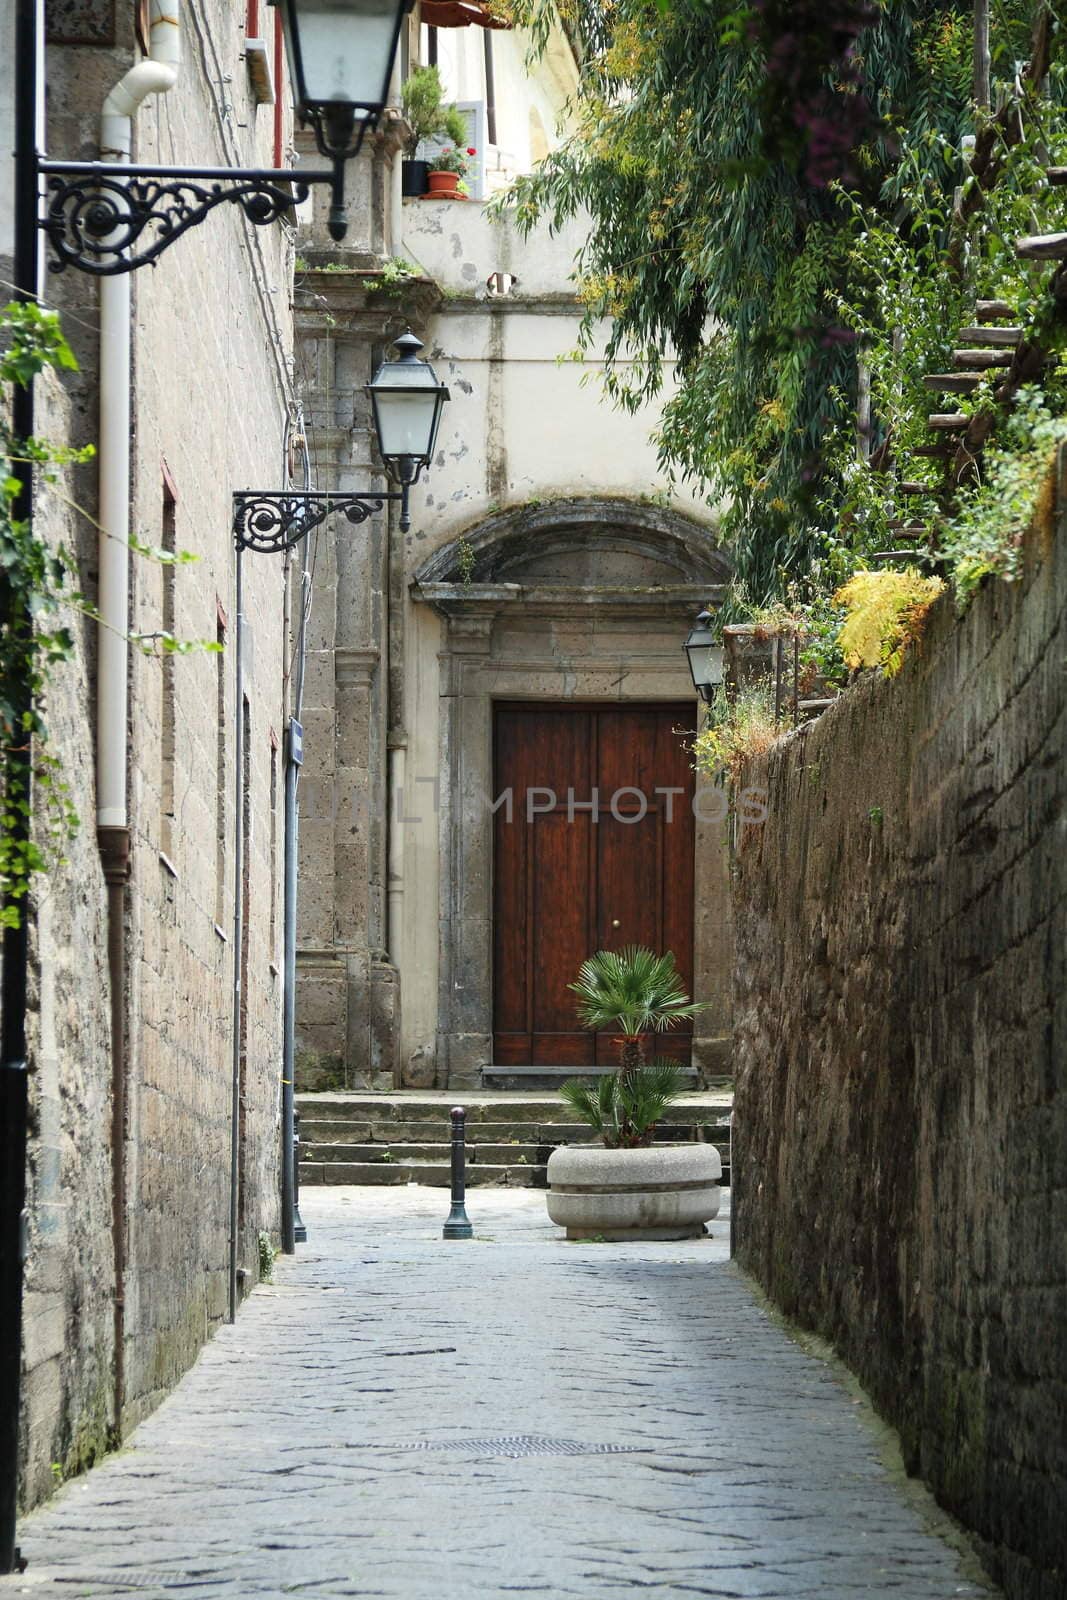 An alleyway with a door in Sorrento, Italy